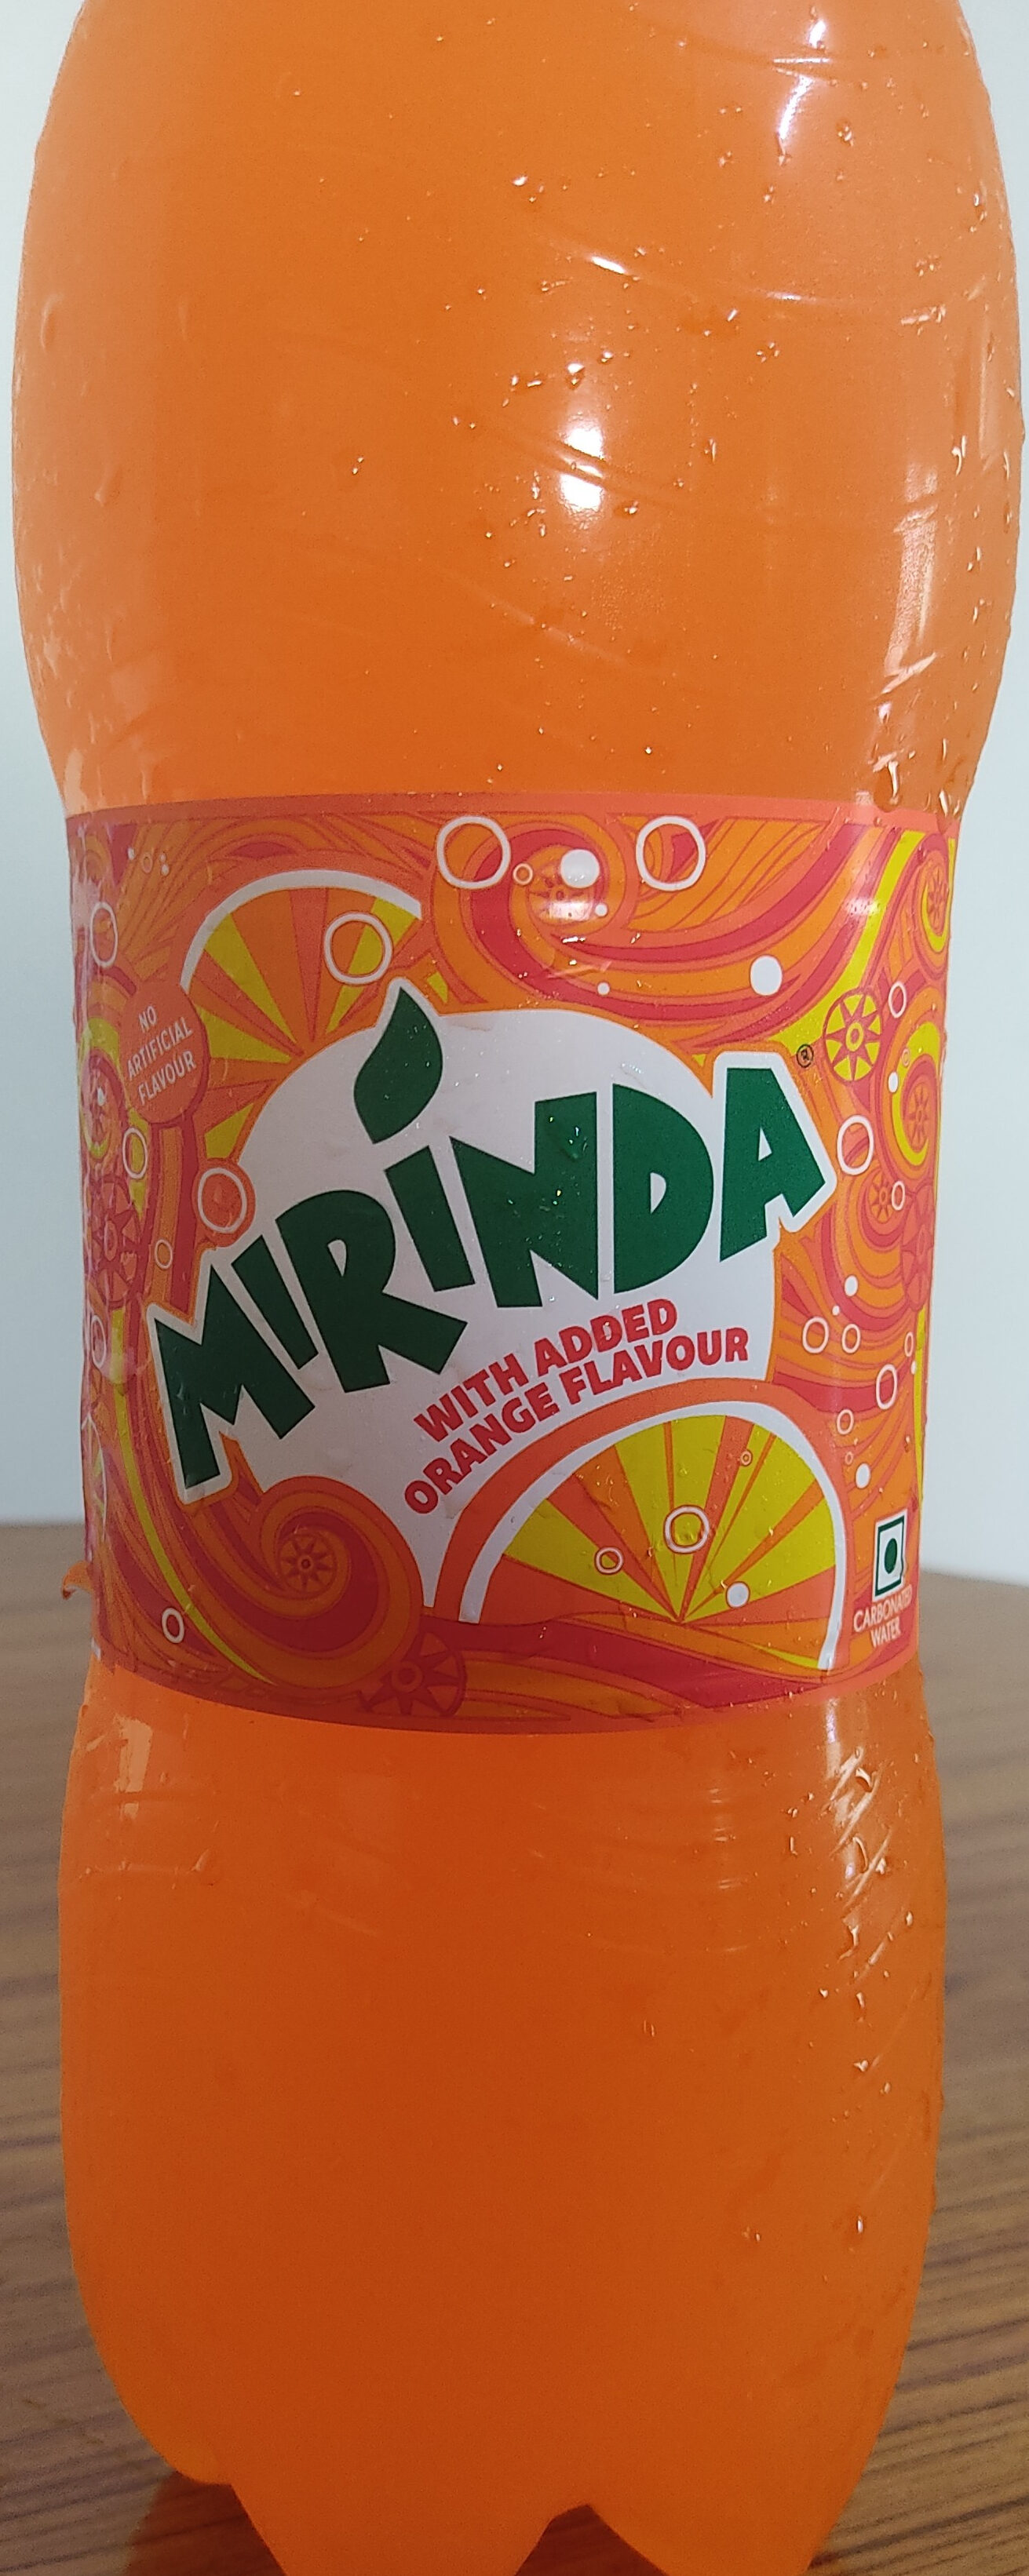 Pepsi Brand Mirinda orange flv 2ltr - Product